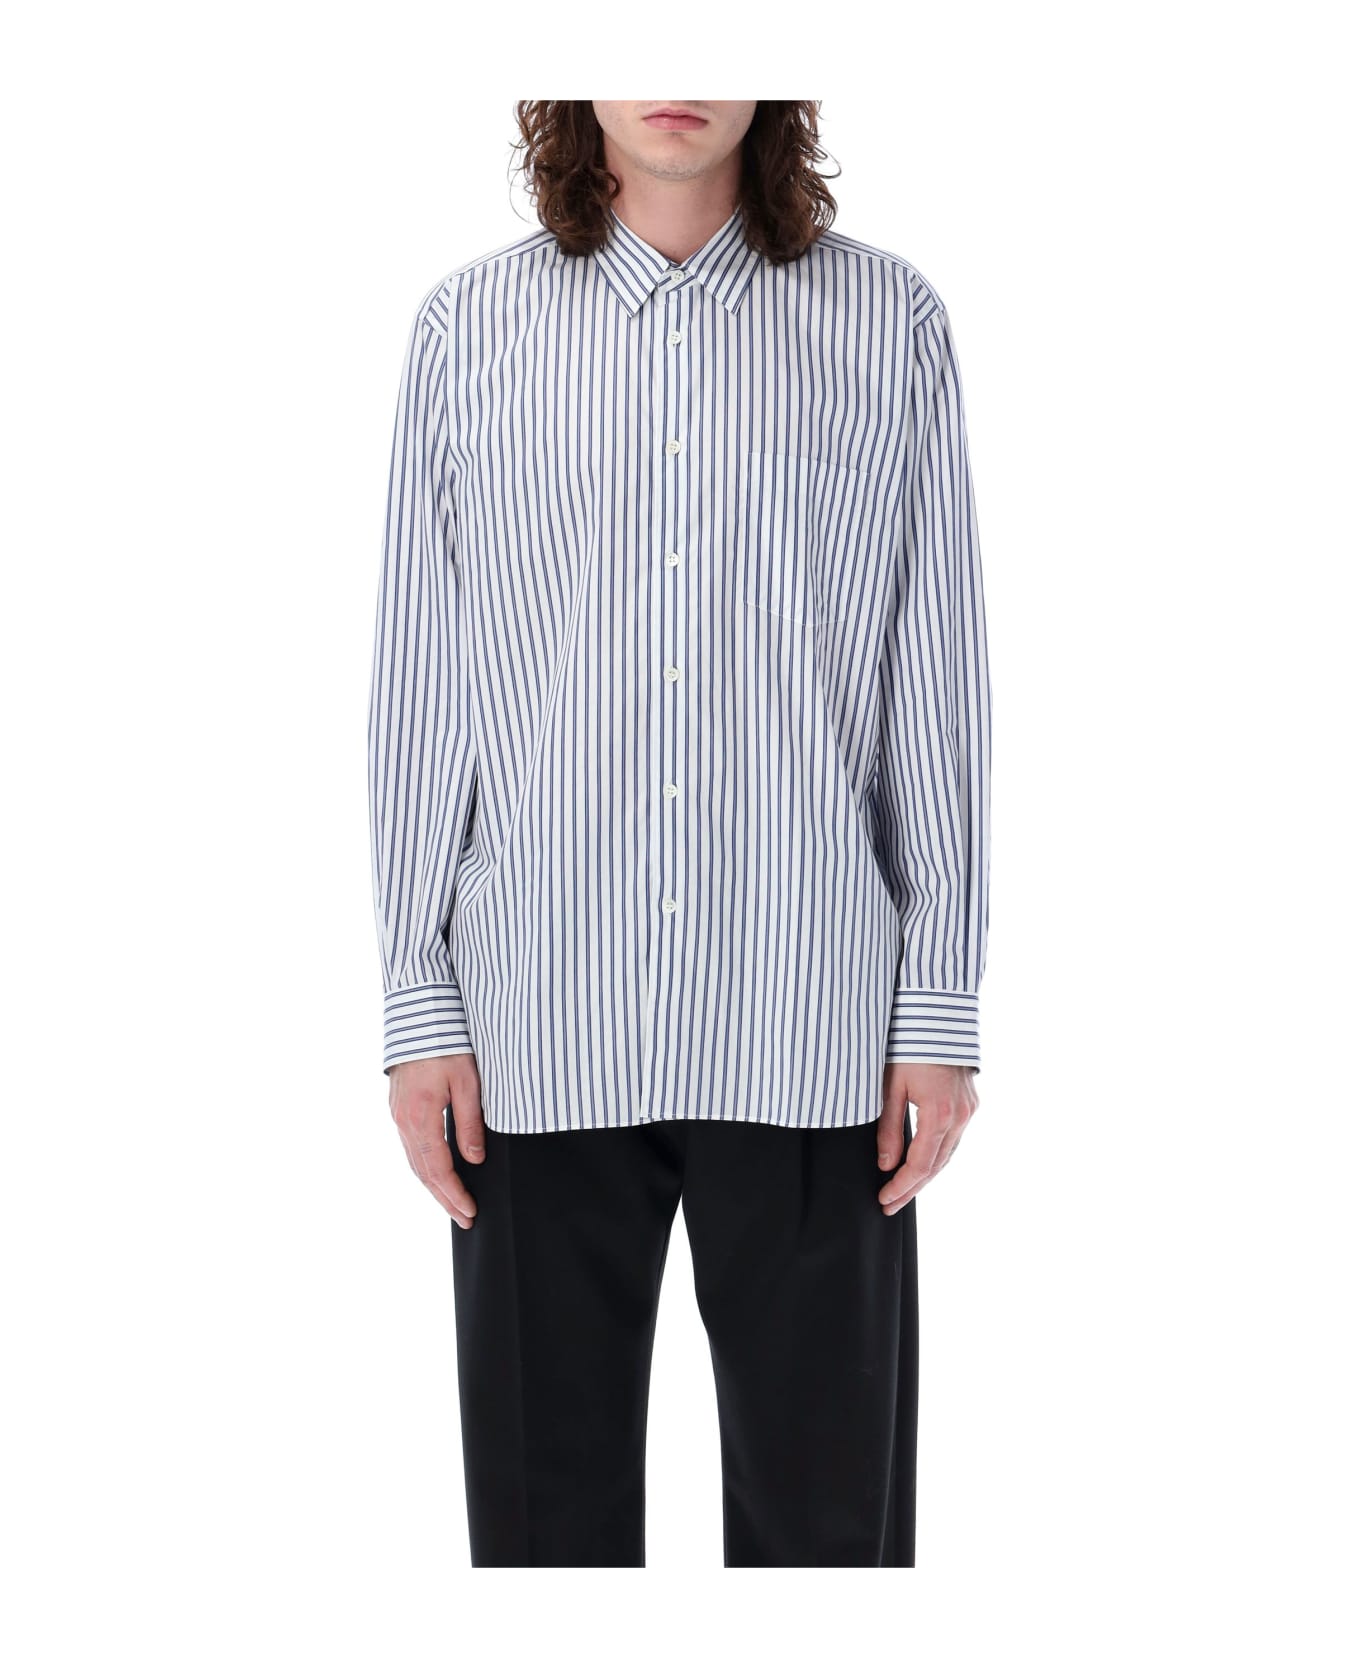 Comme des Garçons Shirt Striped Shirt - WHITE BLUE シャツ